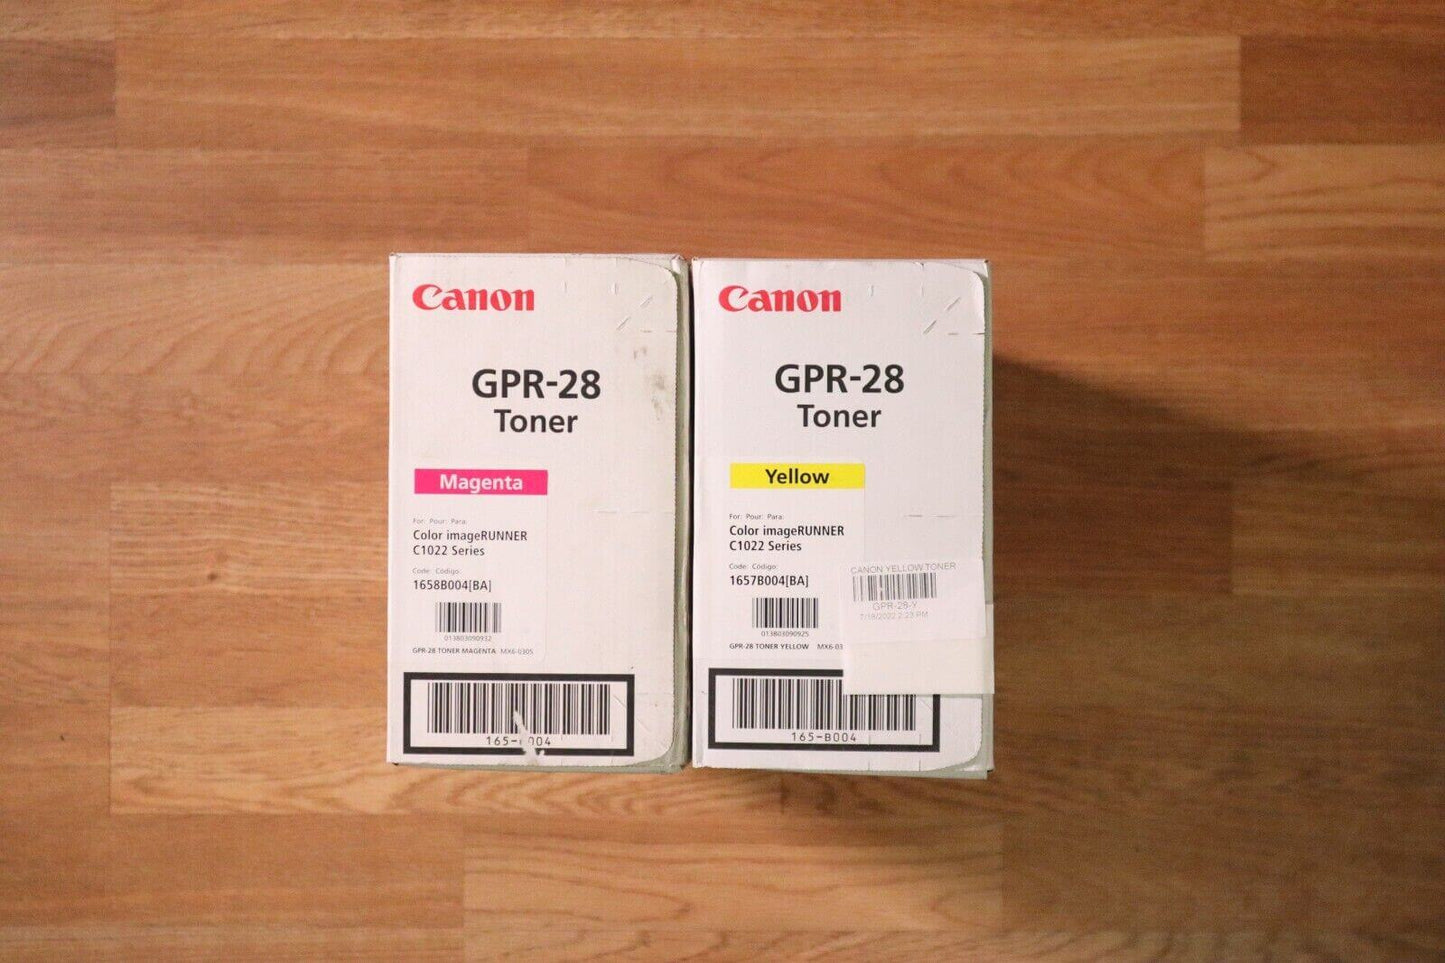 Lot Of 2  Canon GPR-28 MY Toner Color iR C1022 Series  1658B004[BA] 1657B004[BA] - copier-clearance-center